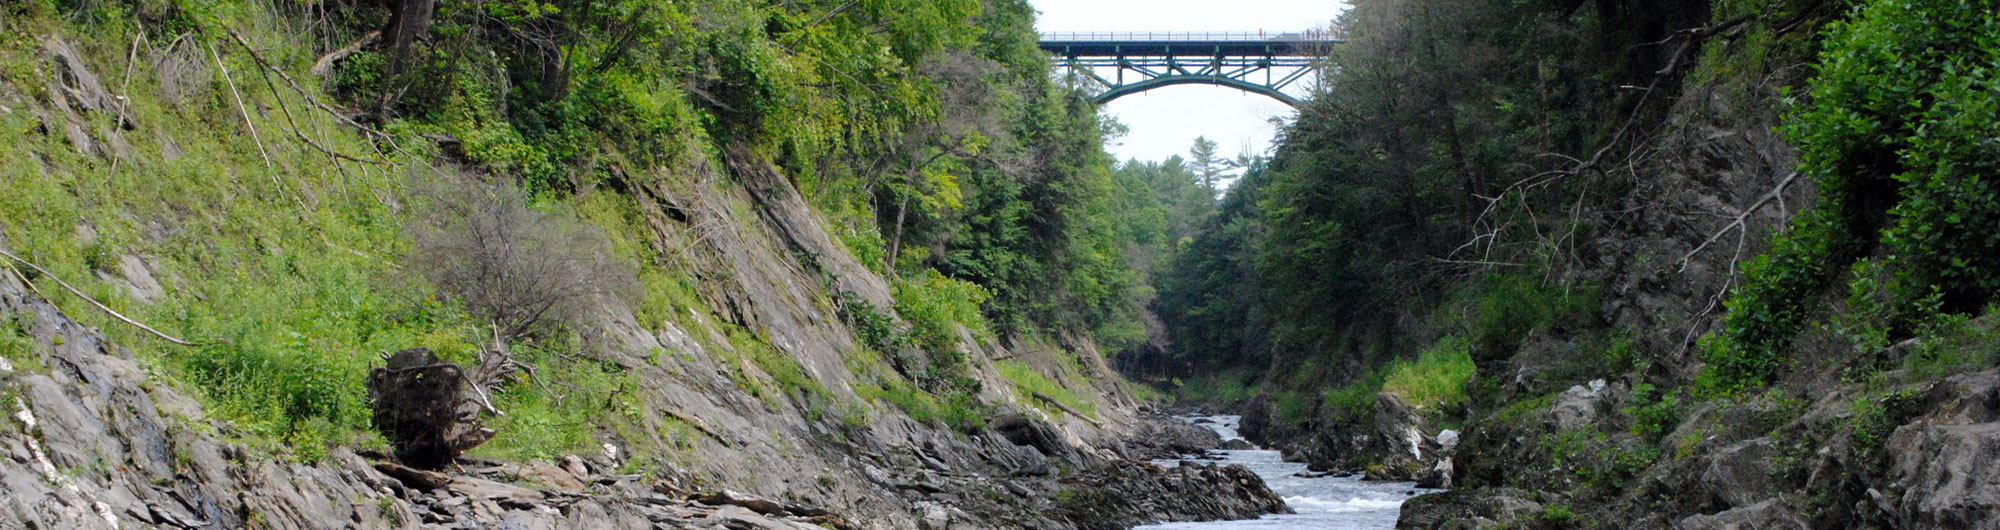 Quechee state park bridge over gully, Vermont, USA